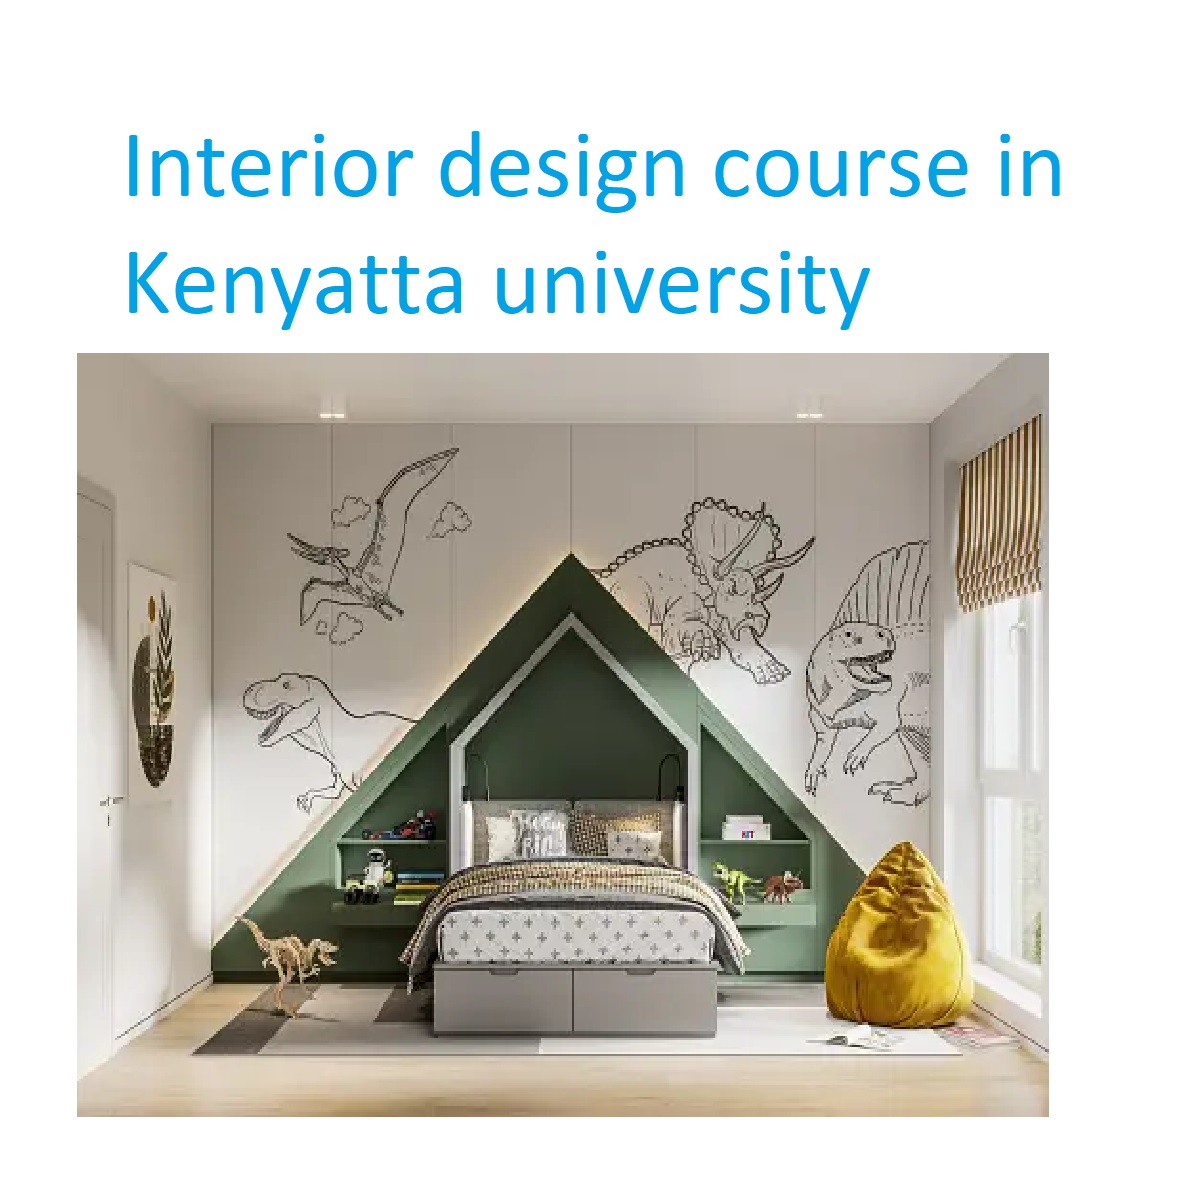 Interior design course in Kenyatta university